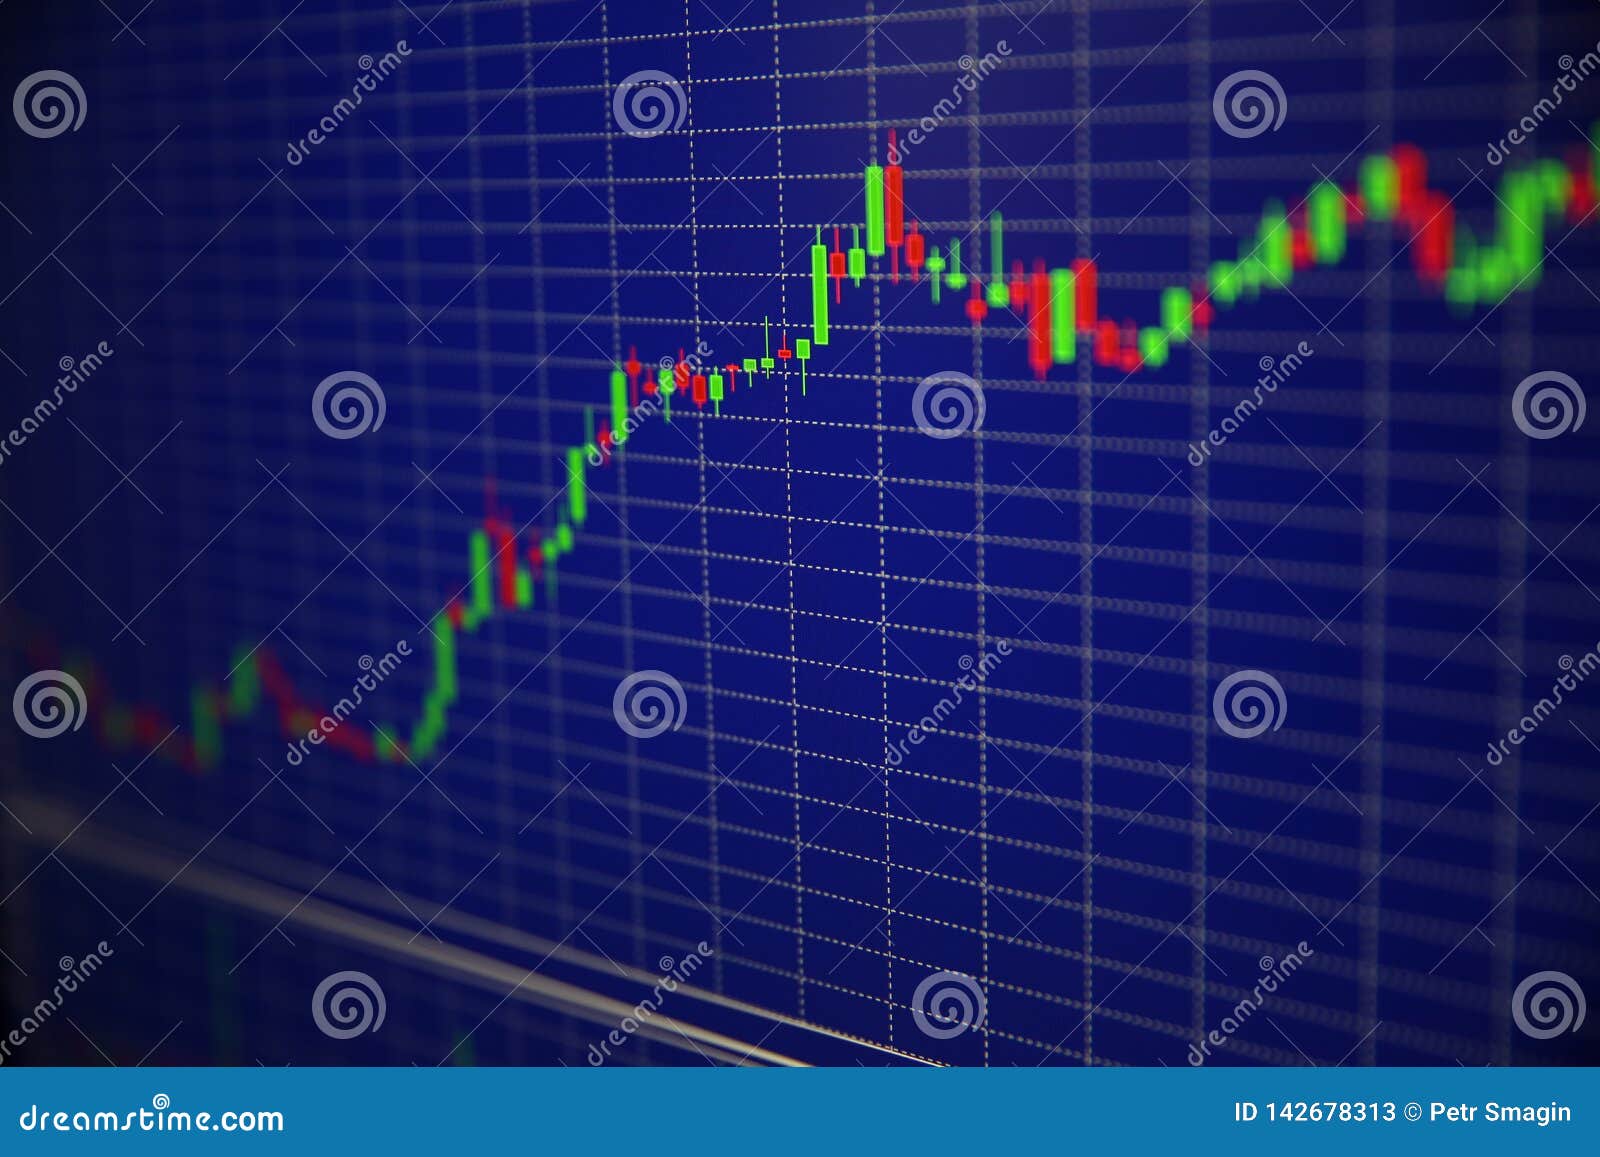 Stock Market Price Chart